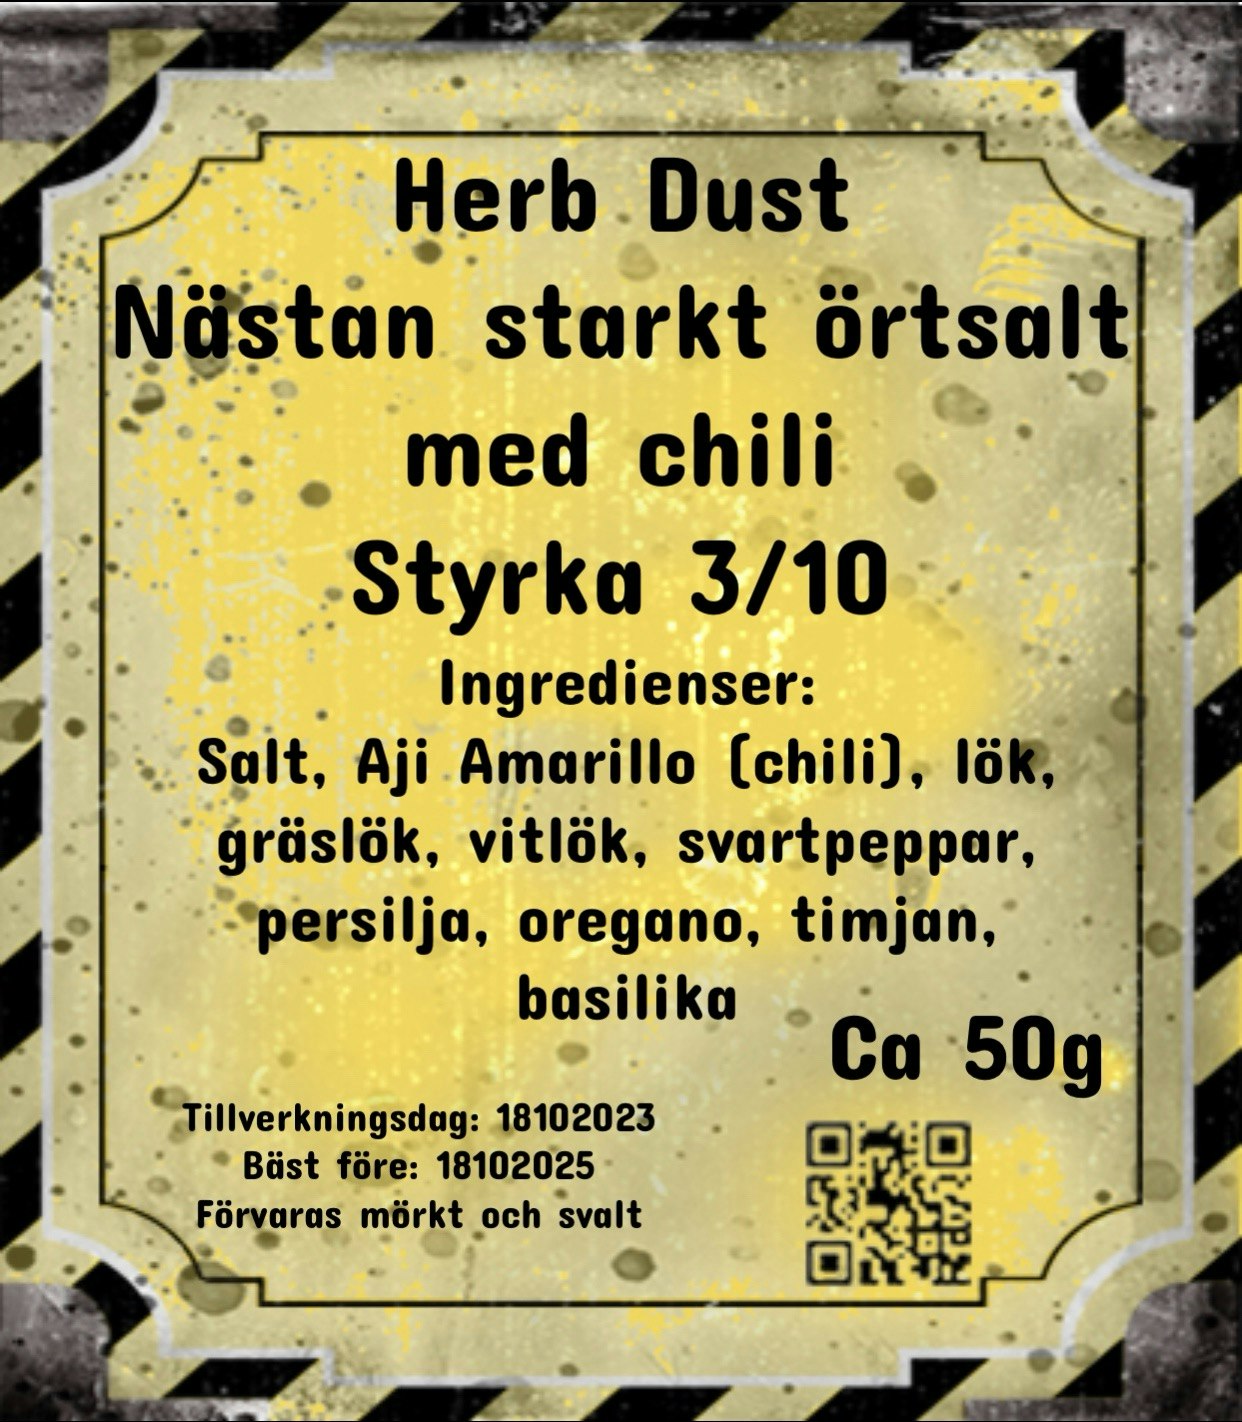 Herb Dust 20% rabatt